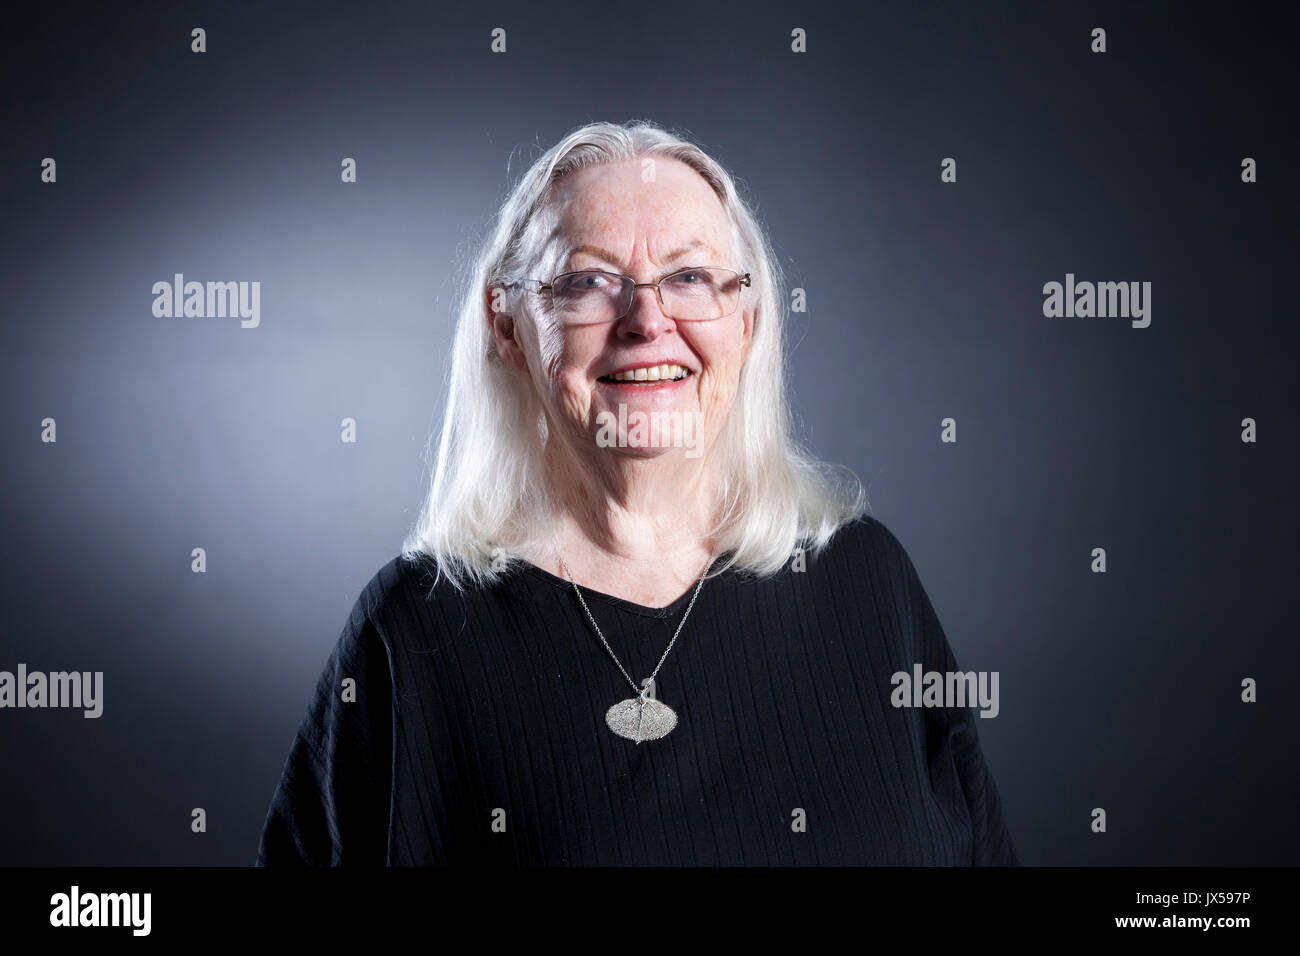 Edinburgh, UK. 14th August 2017. Gillian Clarke, former National Poet of Wales, appearing at the Edinburgh International Book Festival.  Gary Doak / Alamy Live News Stock Photo